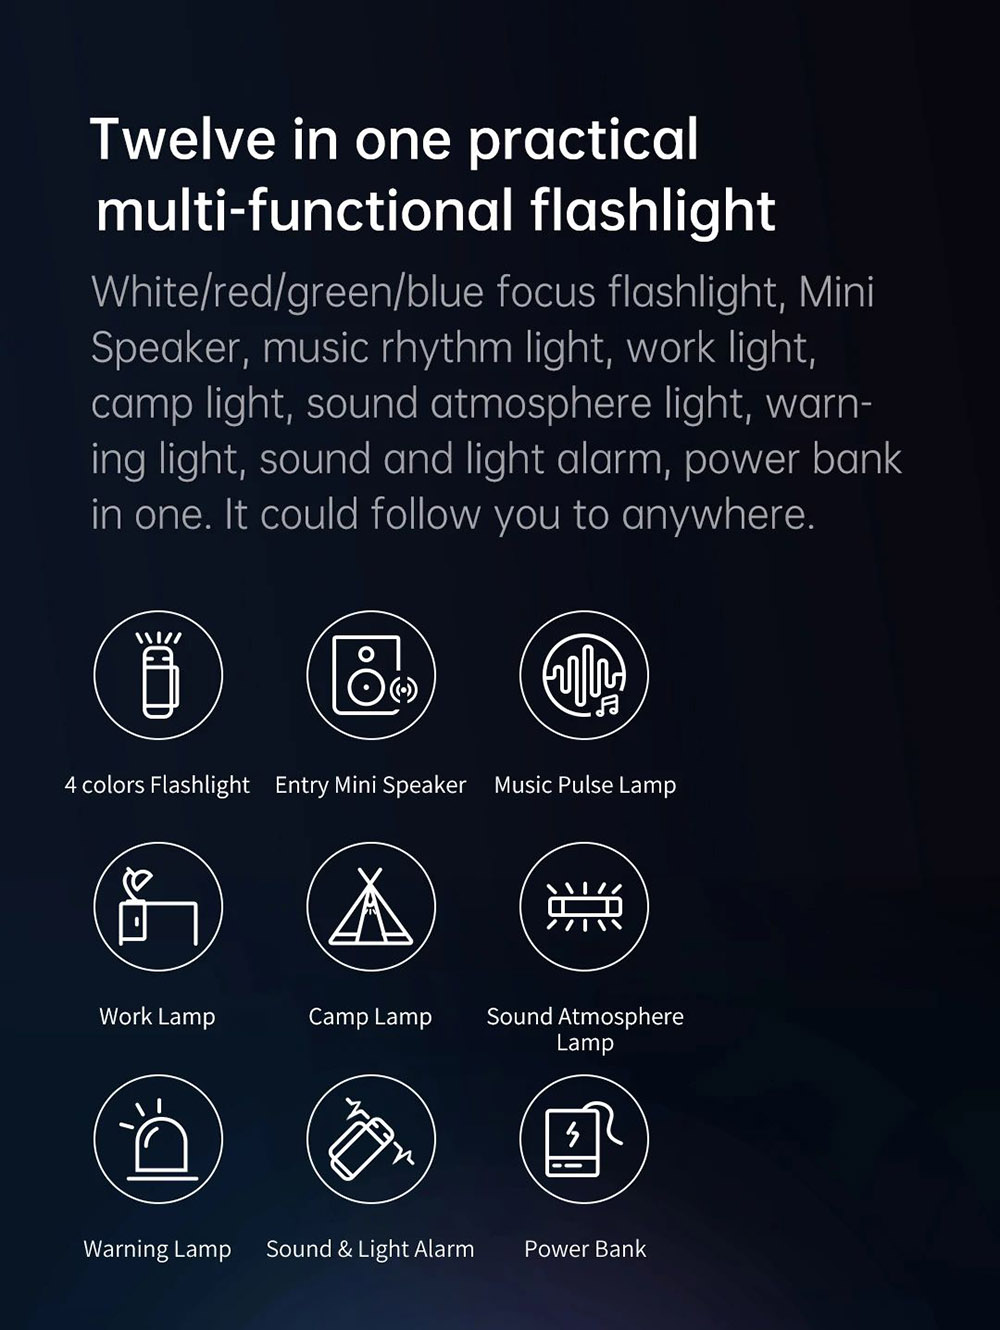 Nextool 12 In 1 900lm Music Pulse Lamp, Telescopic Focus, 245M Long Range LED Flashlight Torch, Mini Speaker Power Bank